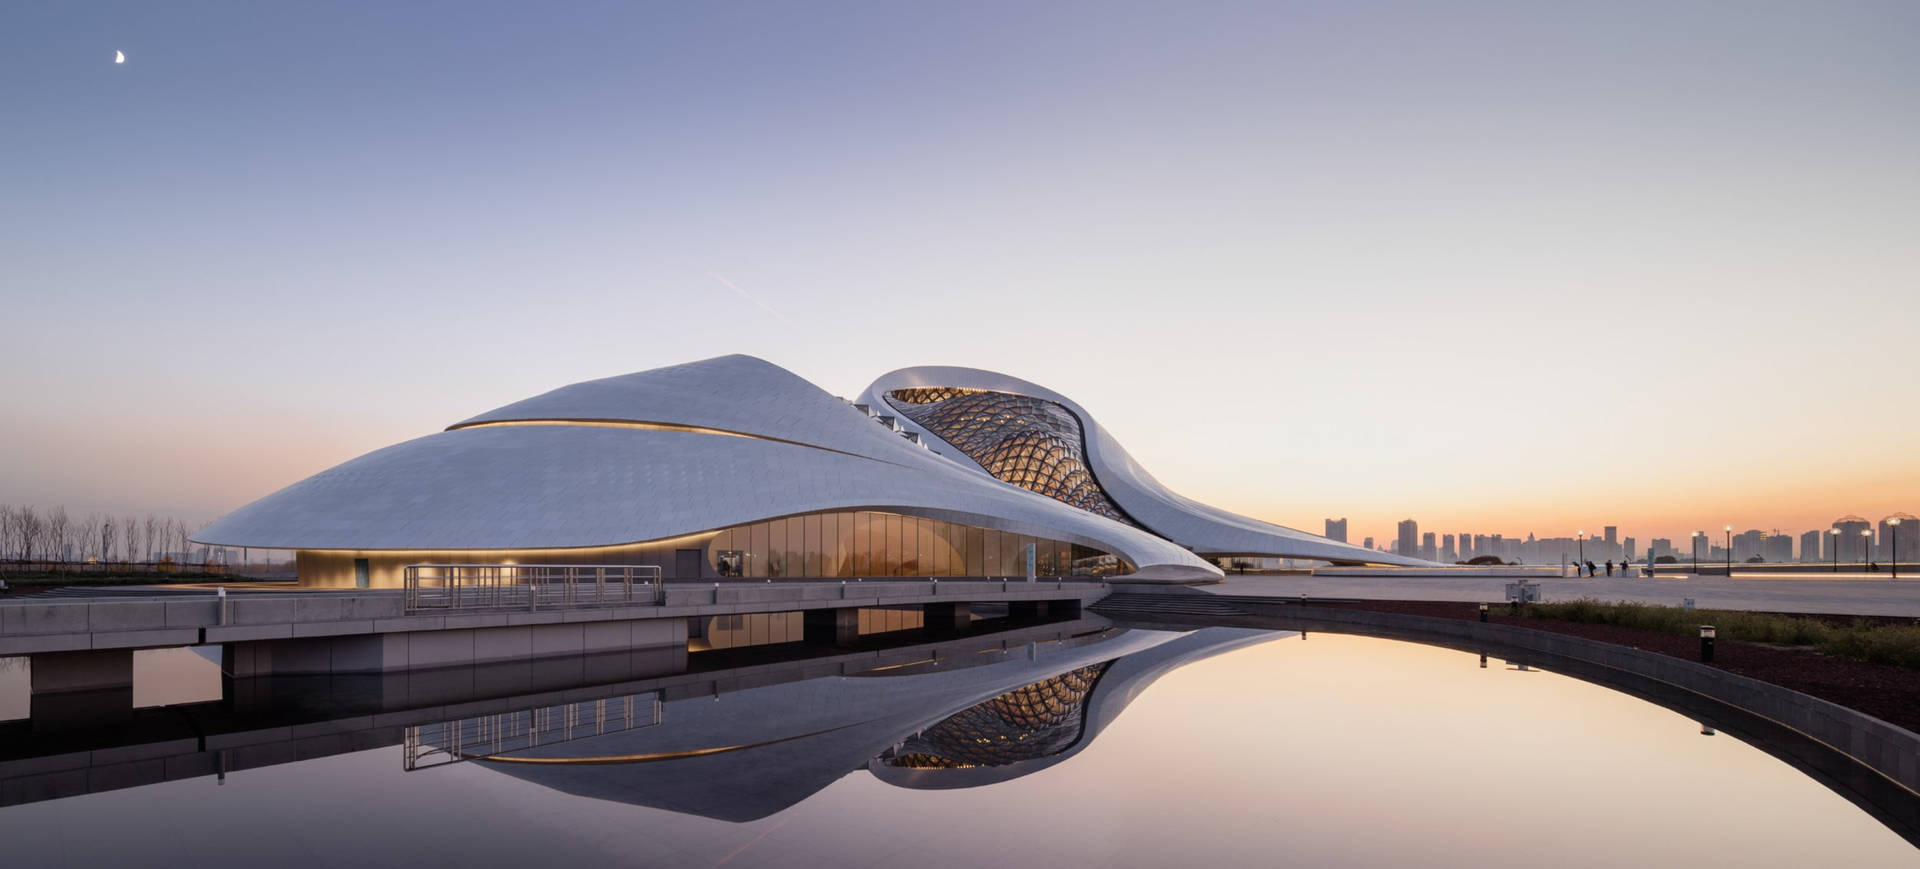 Architecture Harbin Opera House Background